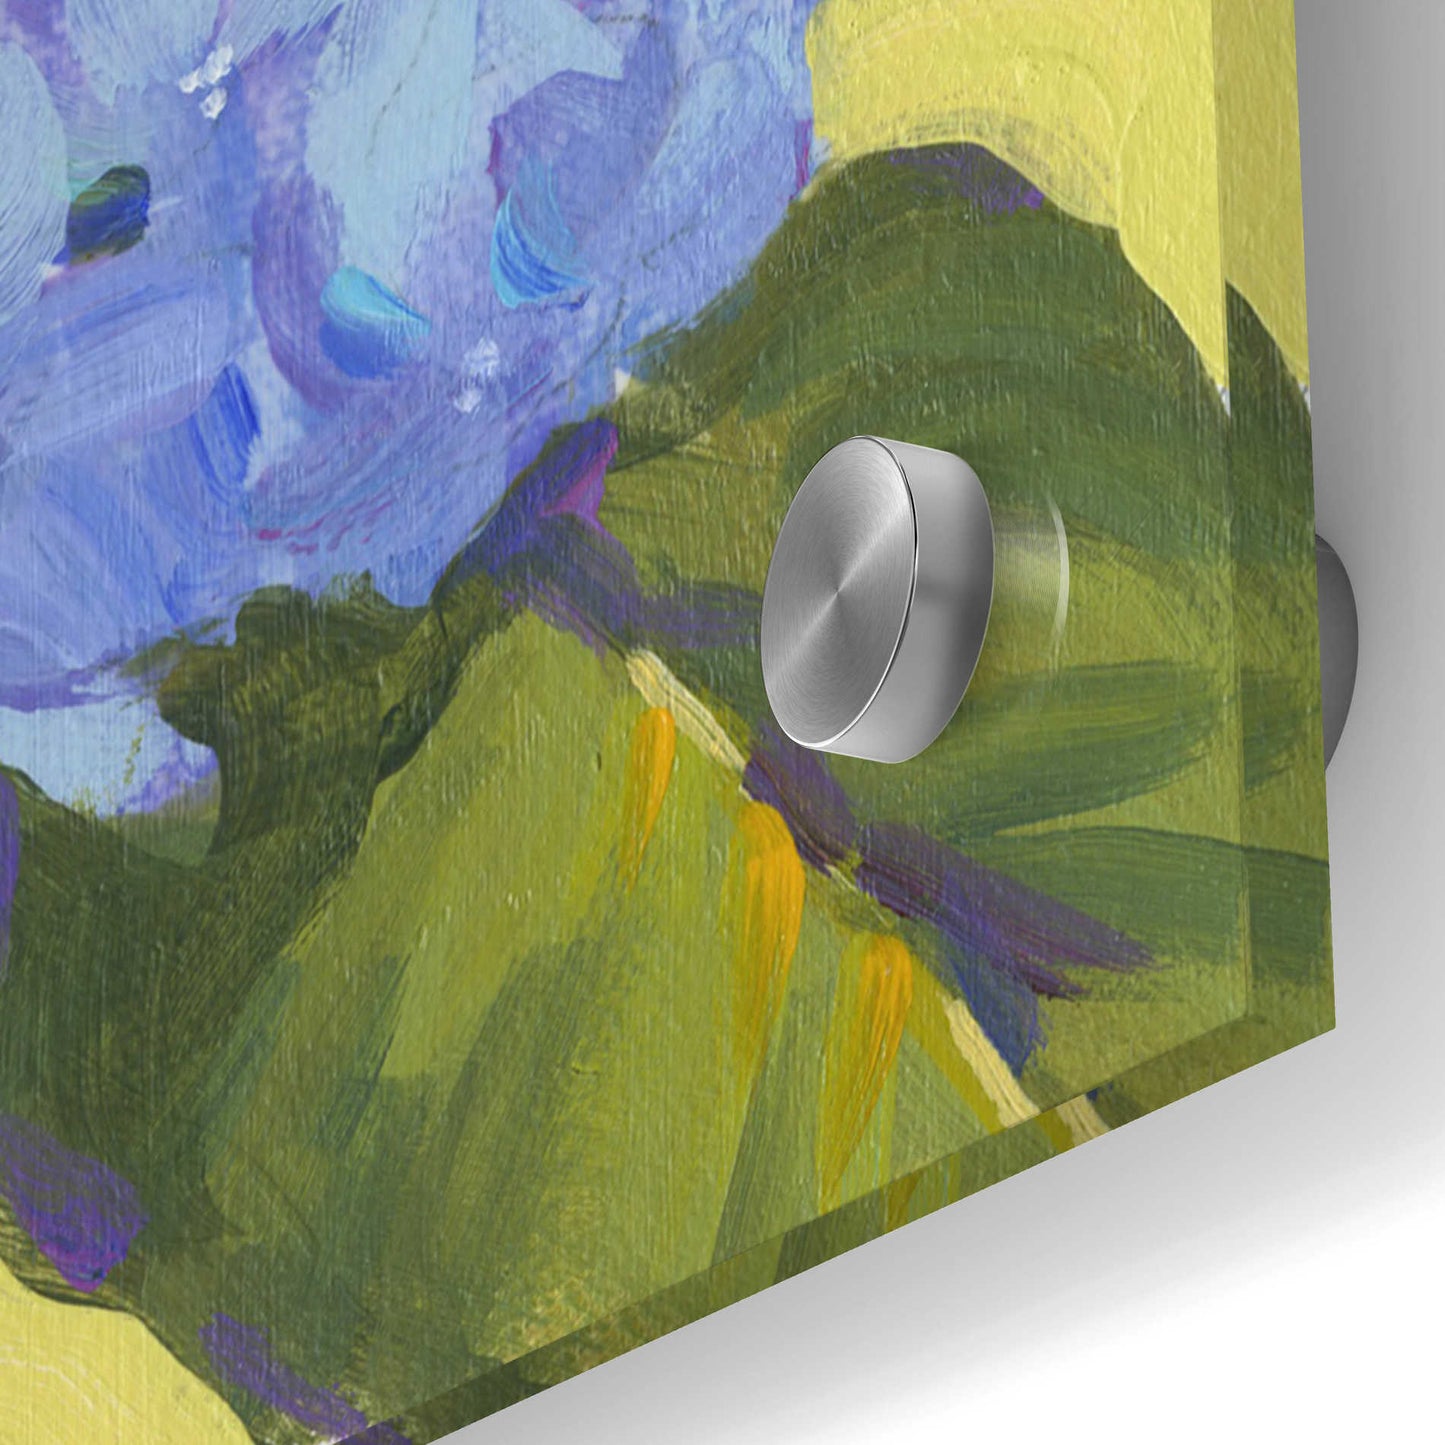 Epic Art 'Spring Hydrangeas II' by Tim O'Toole, Acrylic Glass Wall Art,36x36